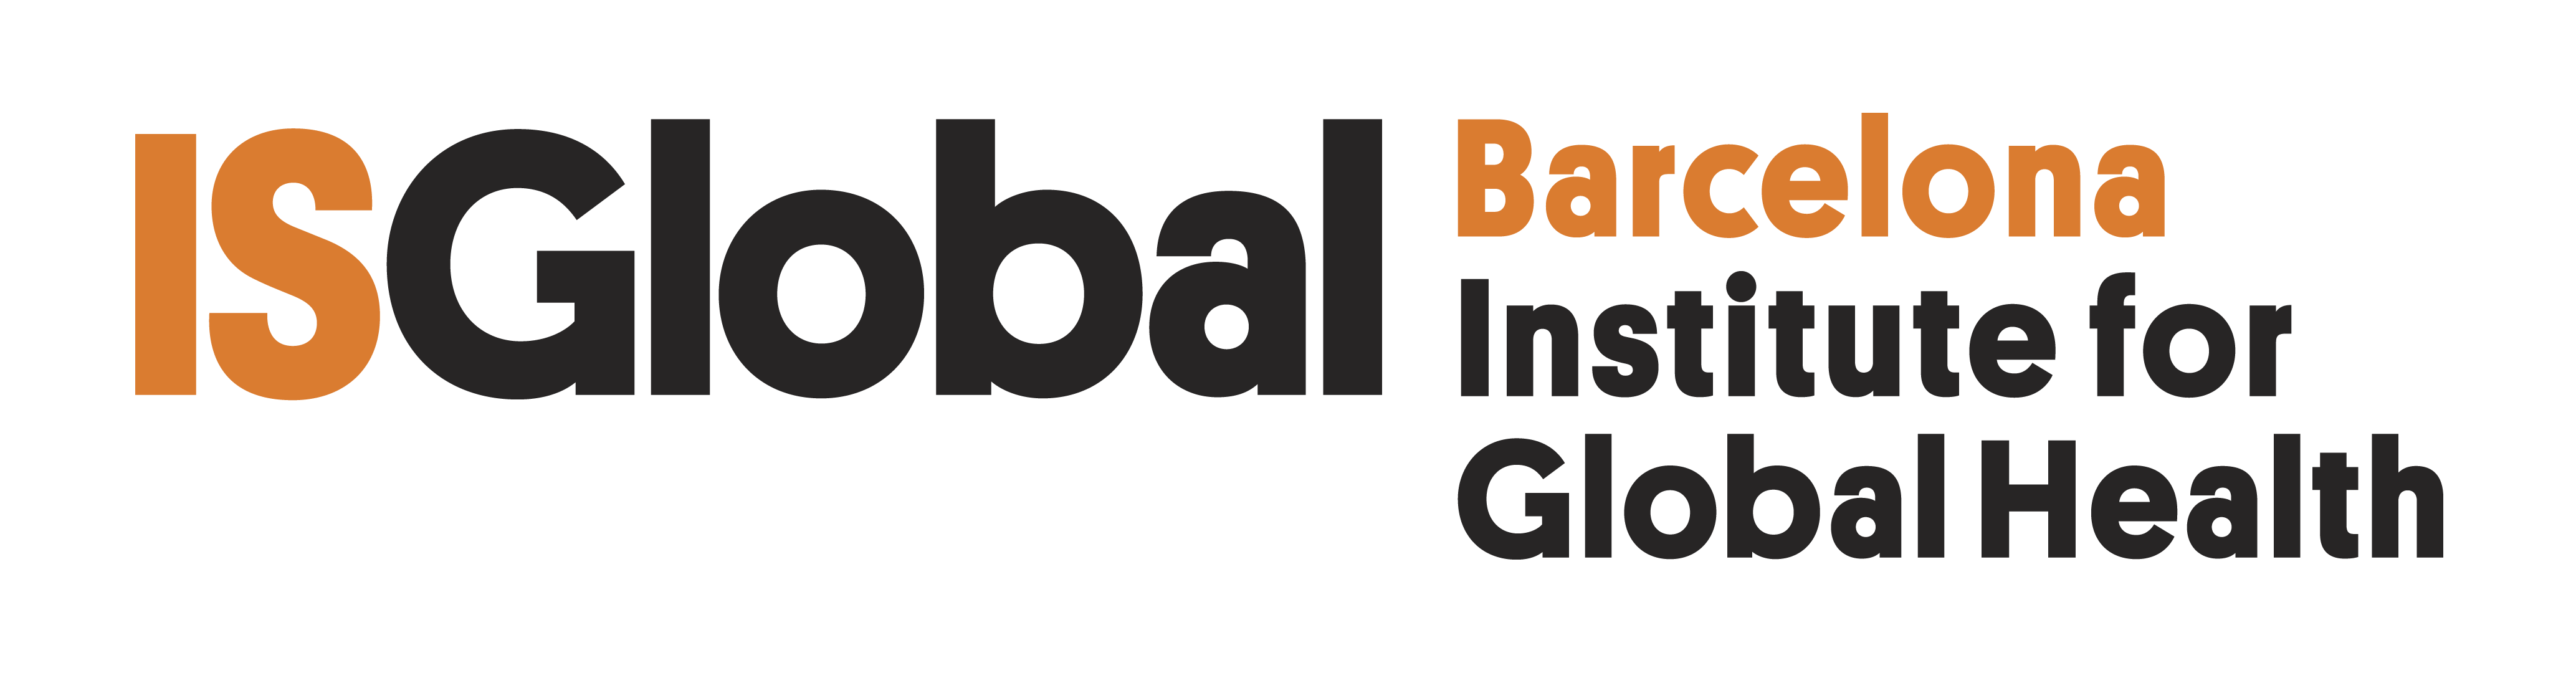 ISGLOBAL logo